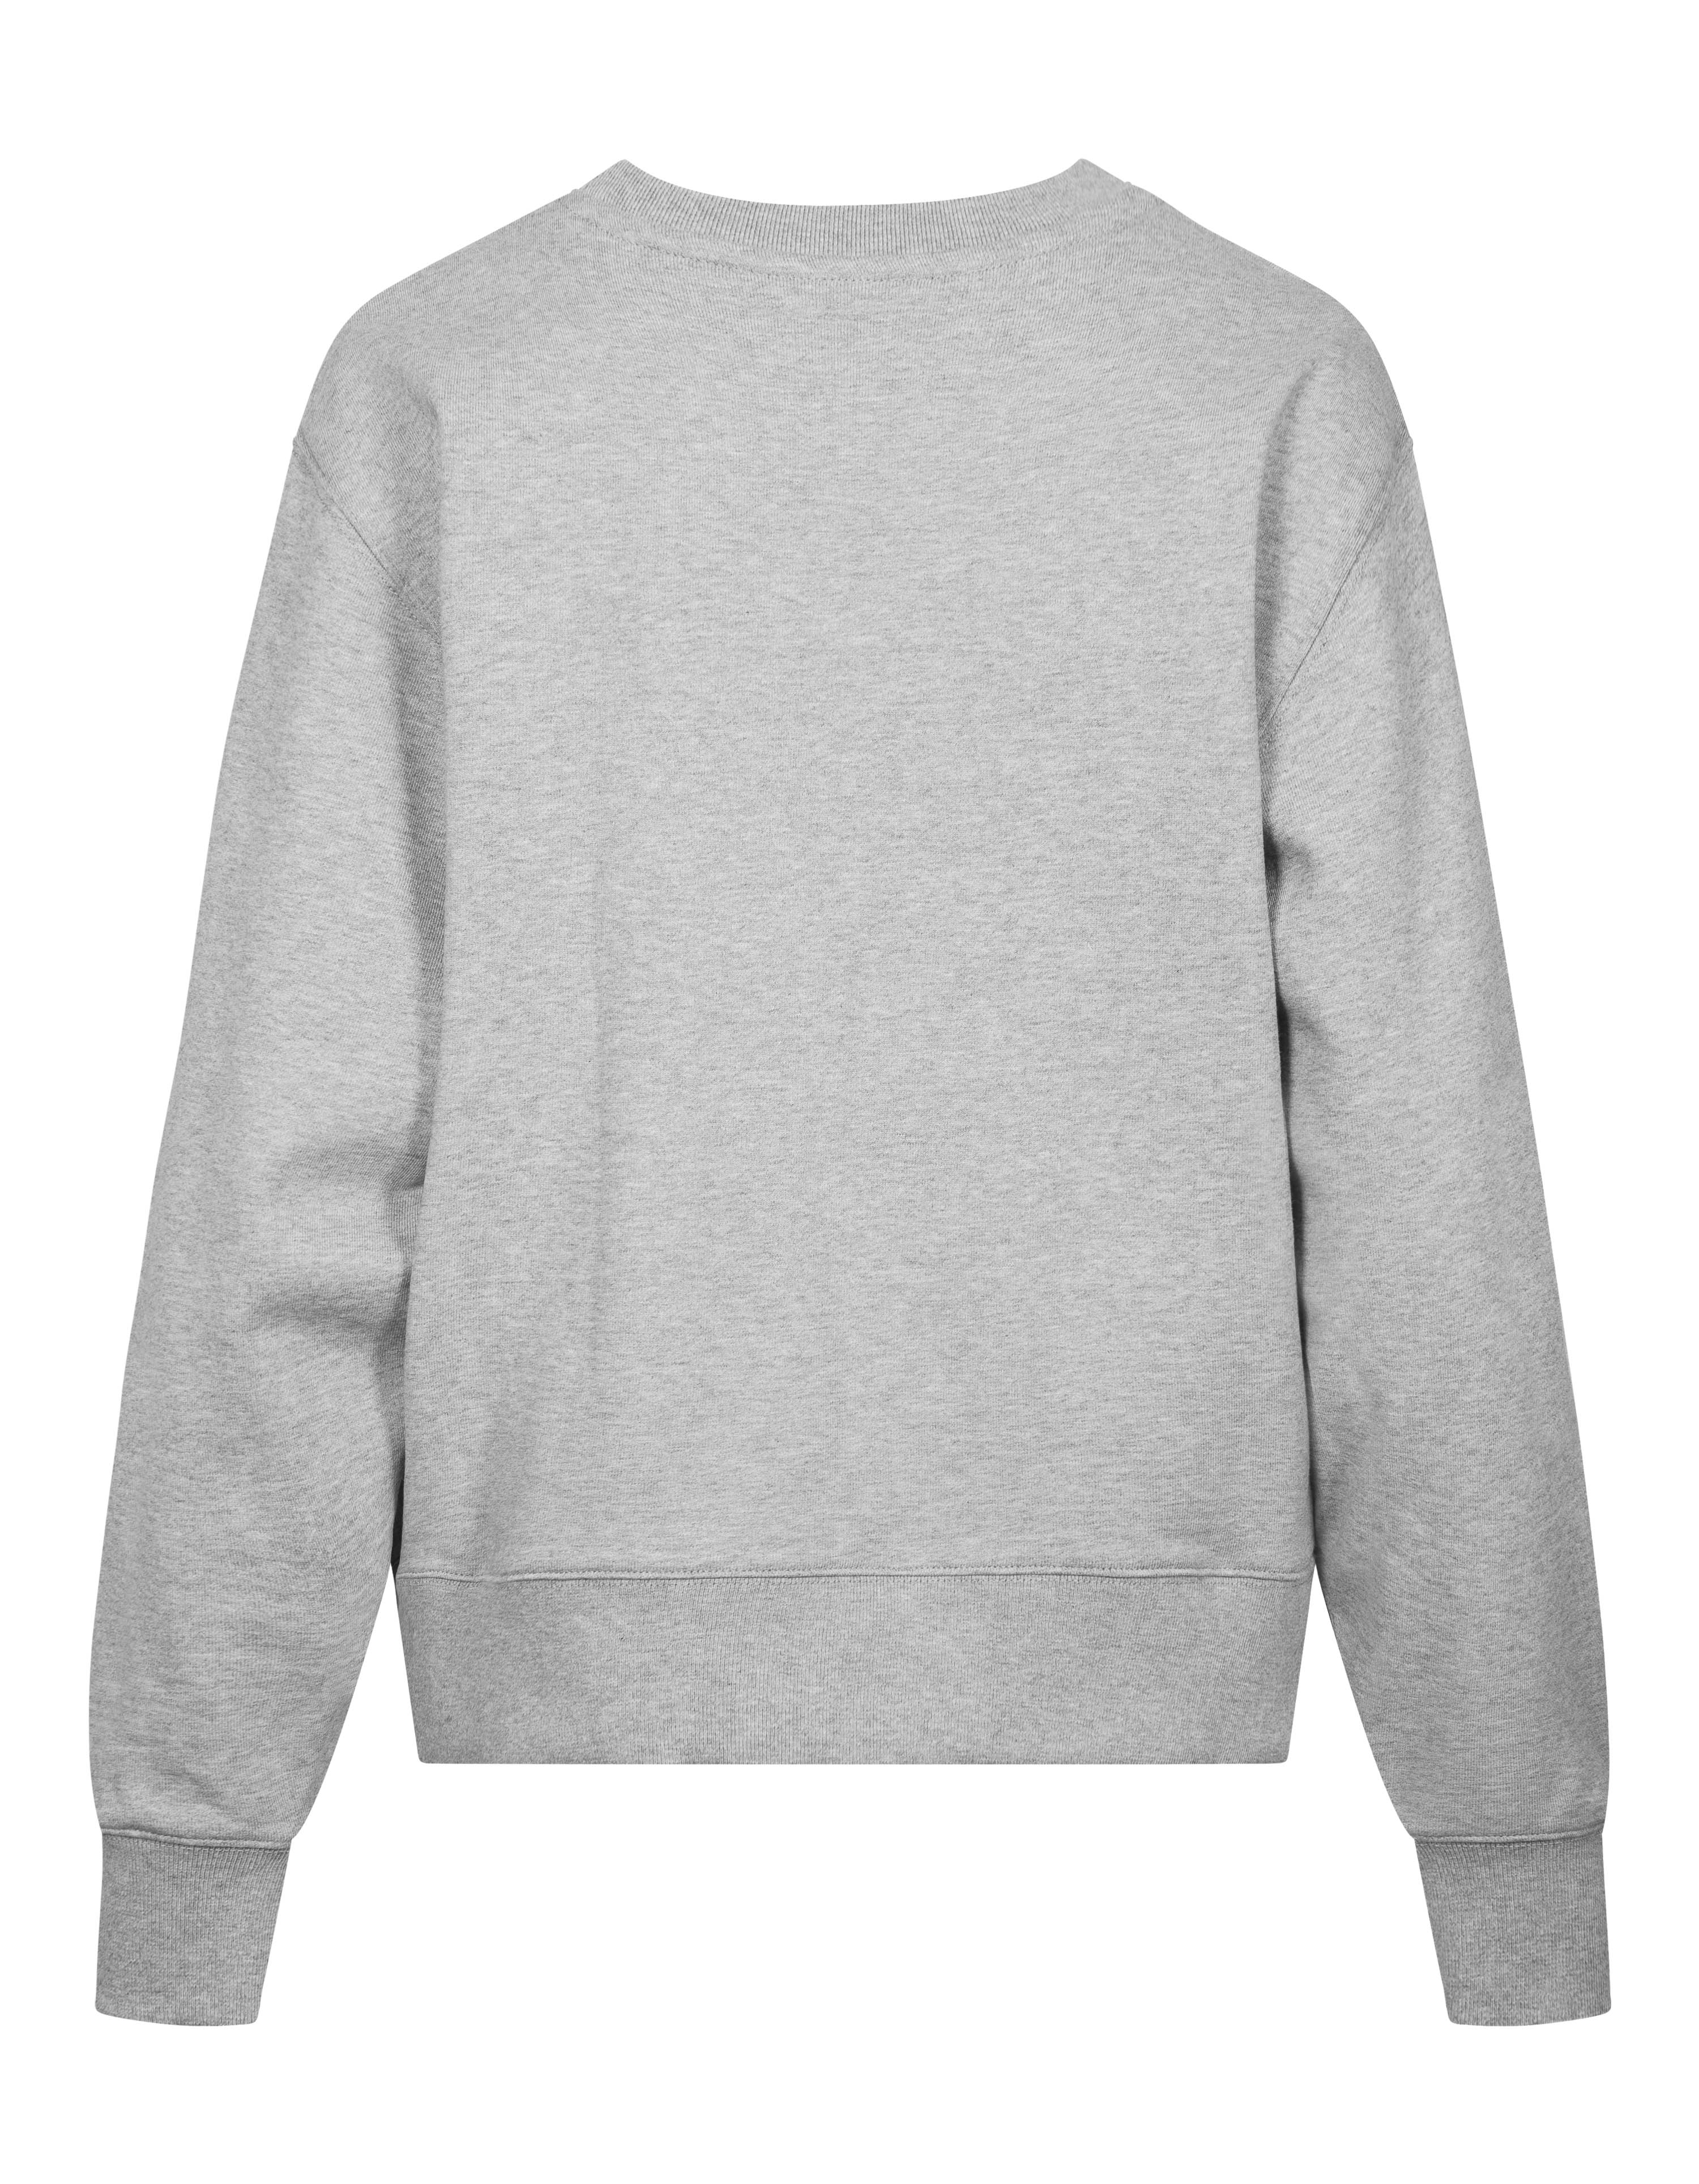 Bulky Crew Sweatshirt, Light Grey Melange, XS